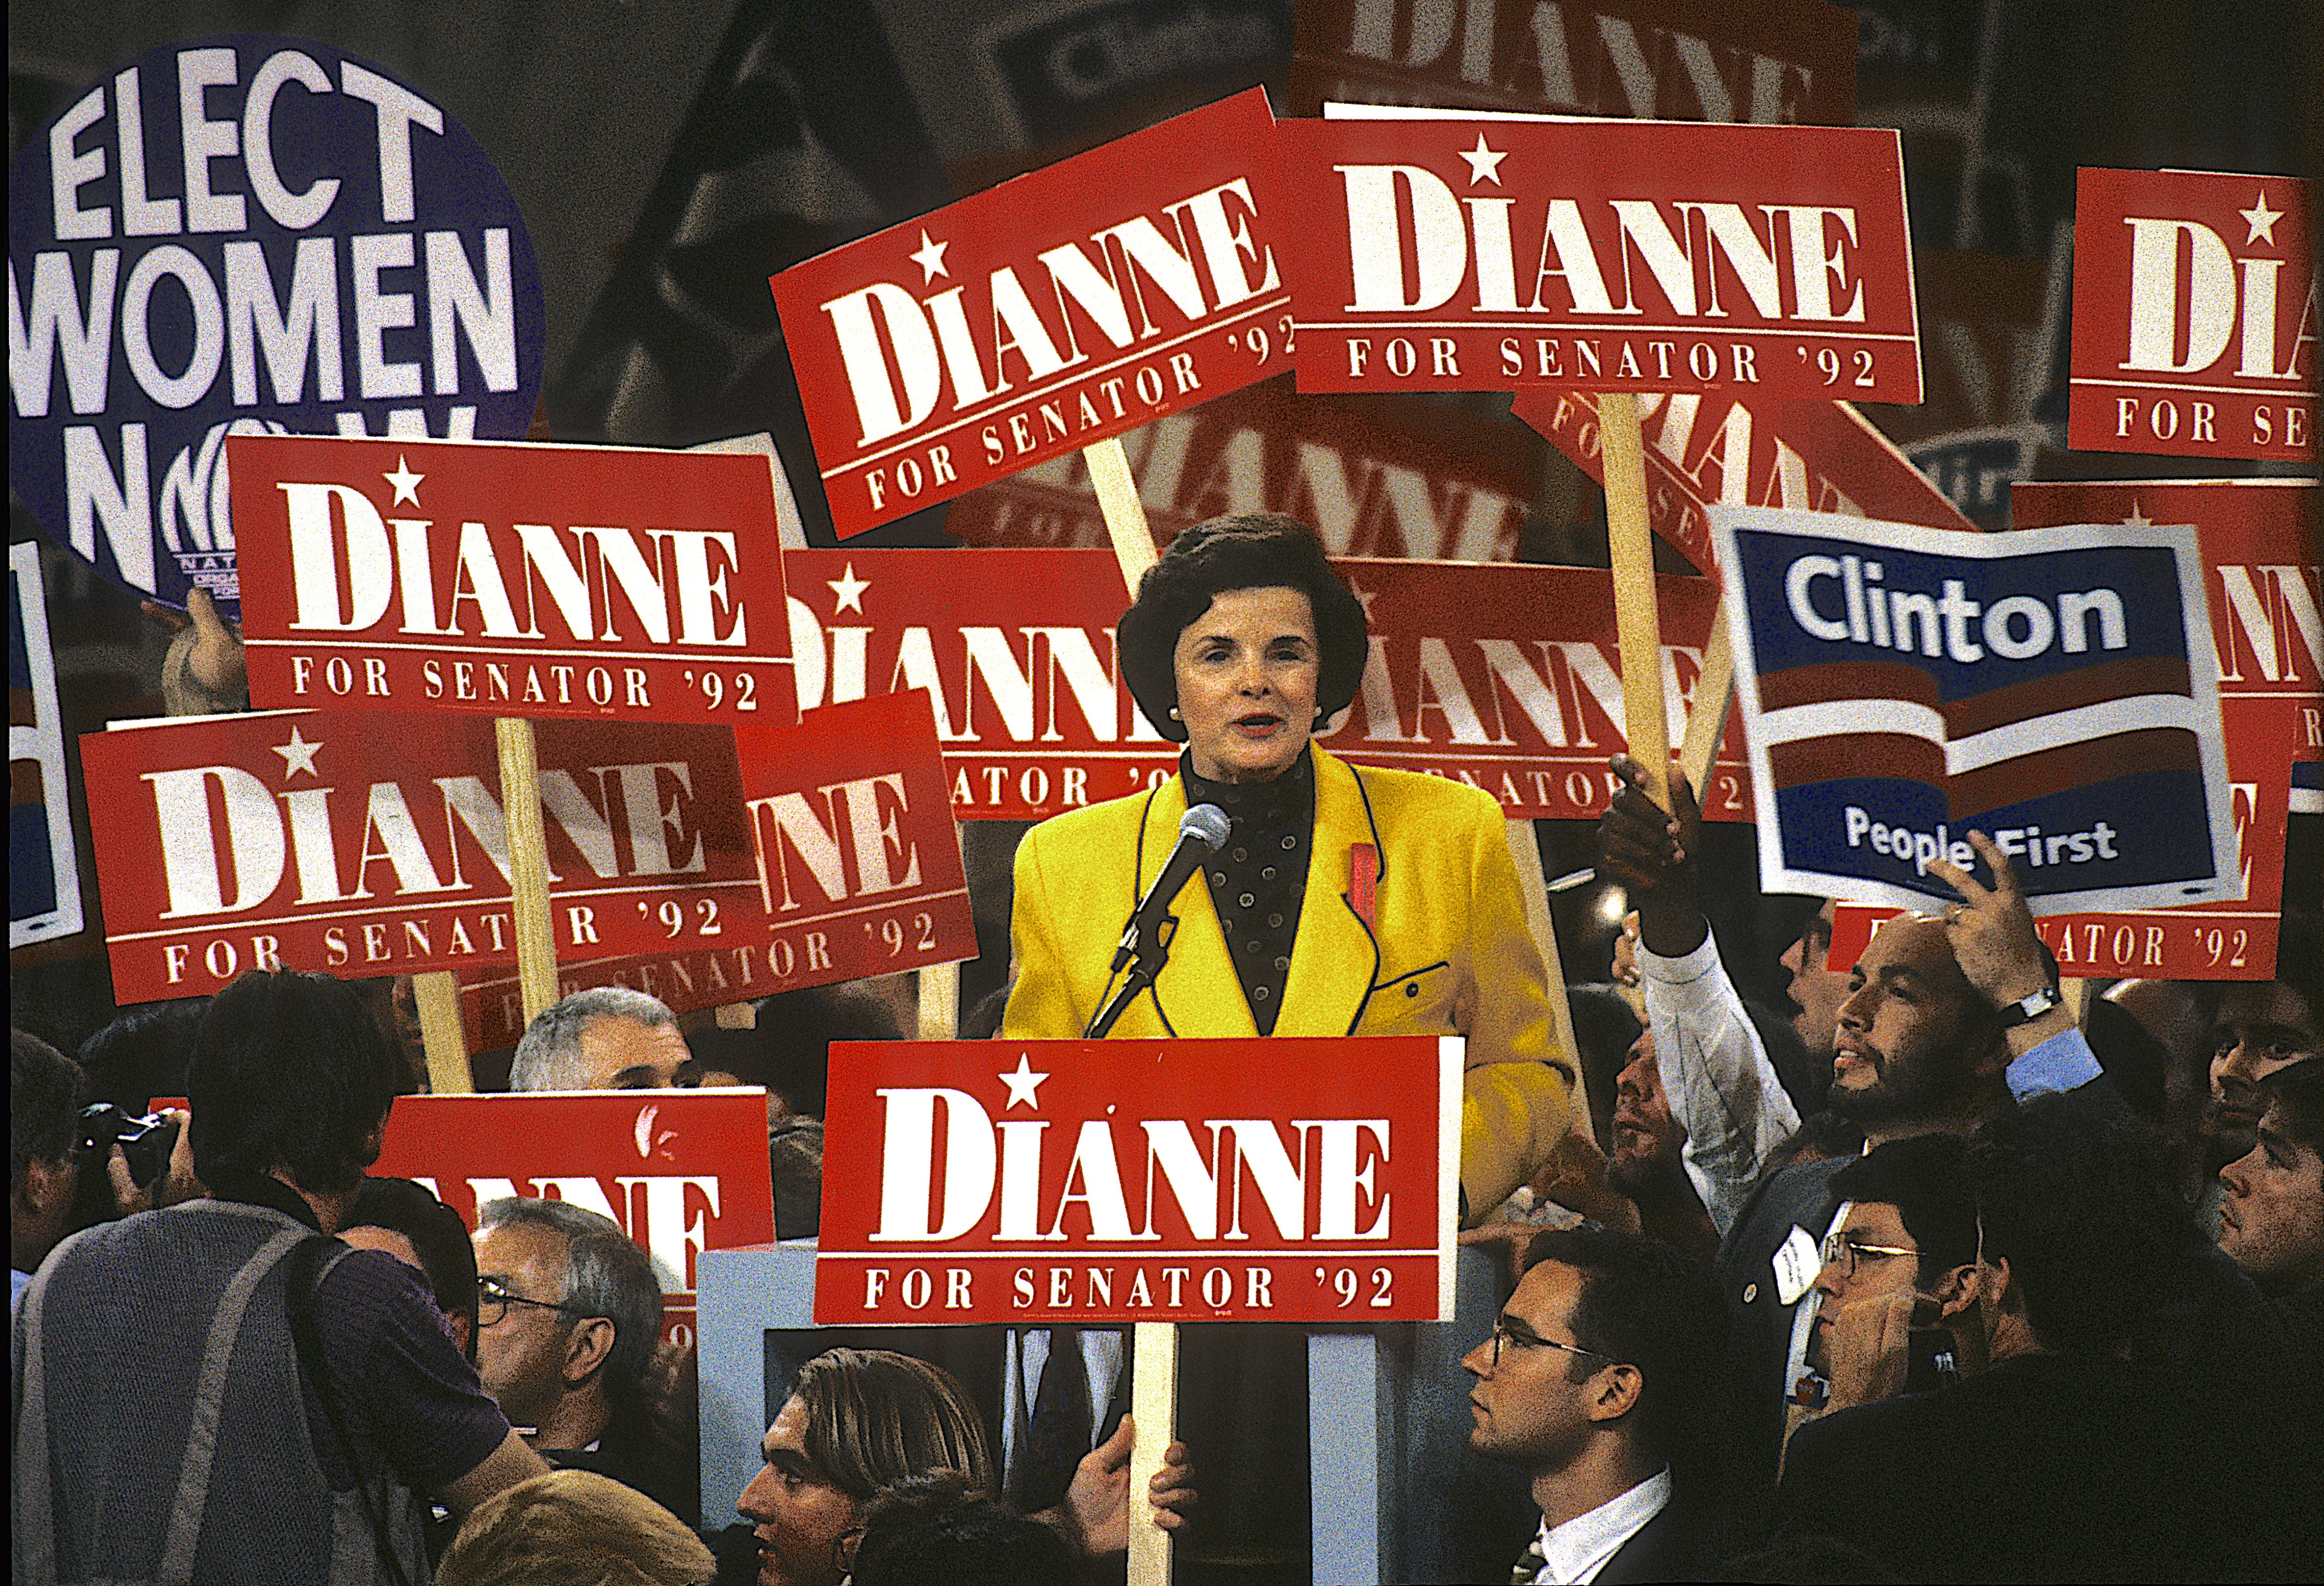 Dianne Feinstein, the Mayor of San Francisco, addresses the Democratic National Convention in 1992. (Mark Reinstein&mdash;Corbis via Getty Images)